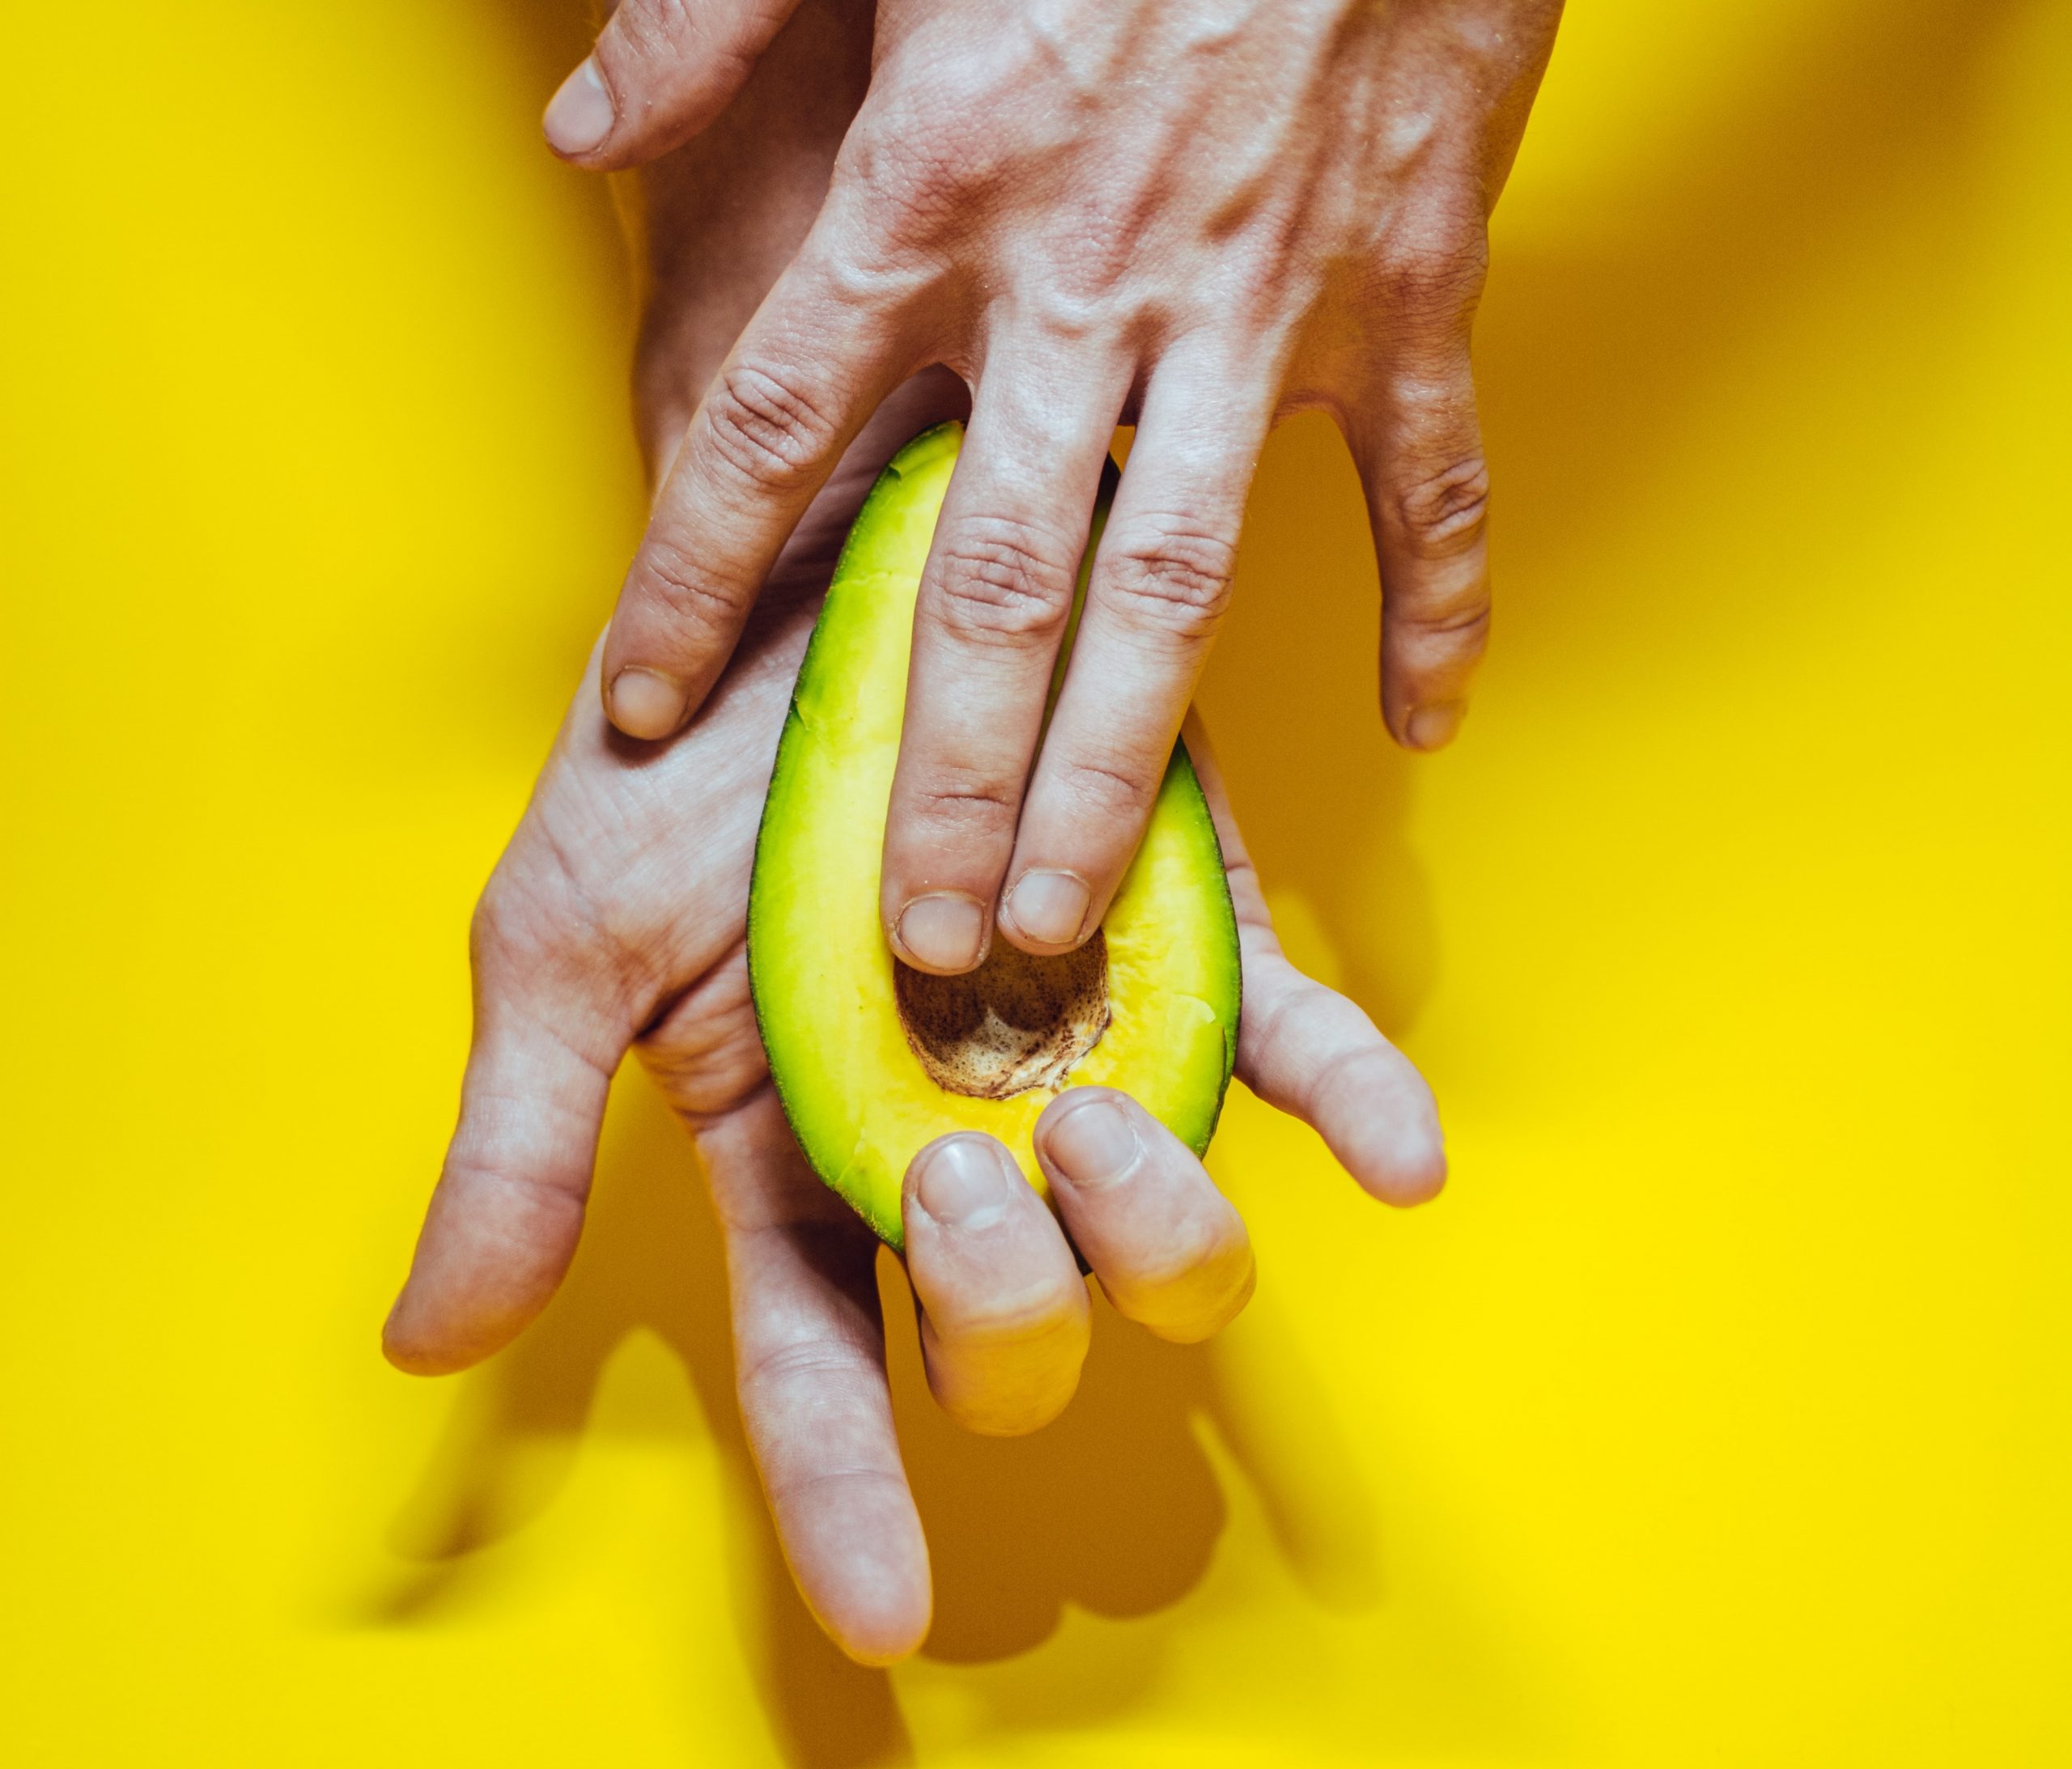 hands touching an avocado